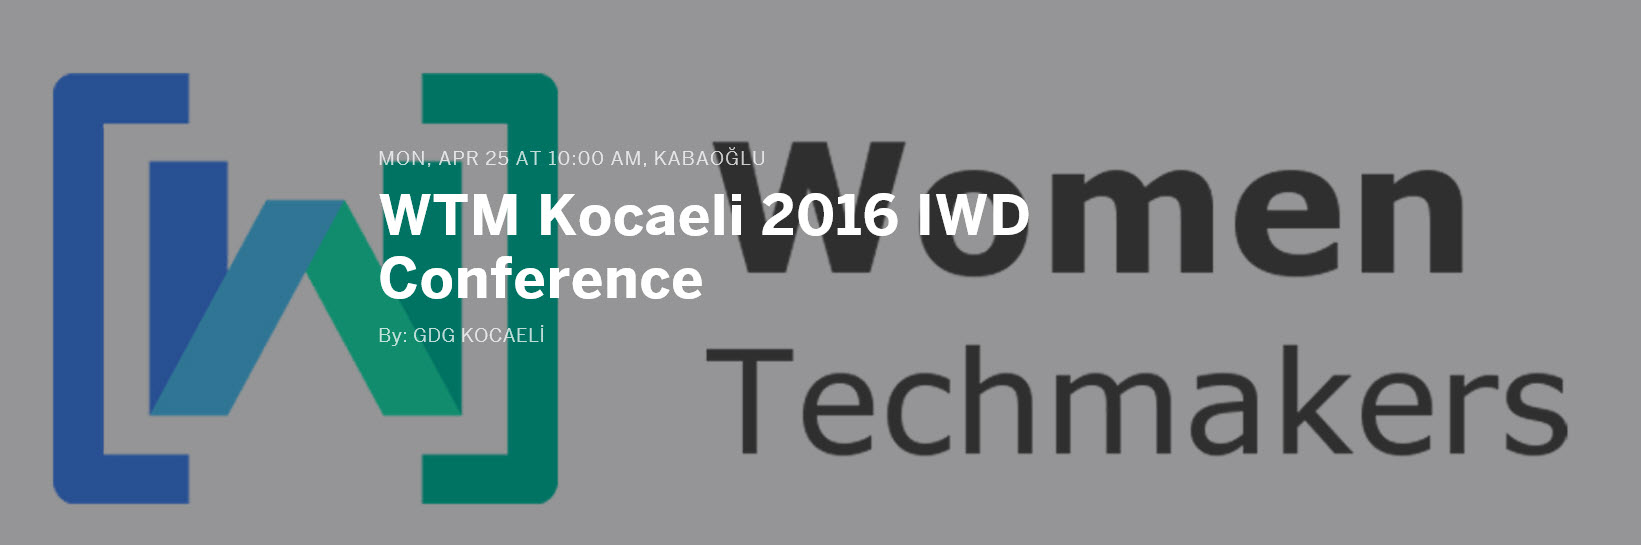 WTM Kocaeli 2016 IWD Conference